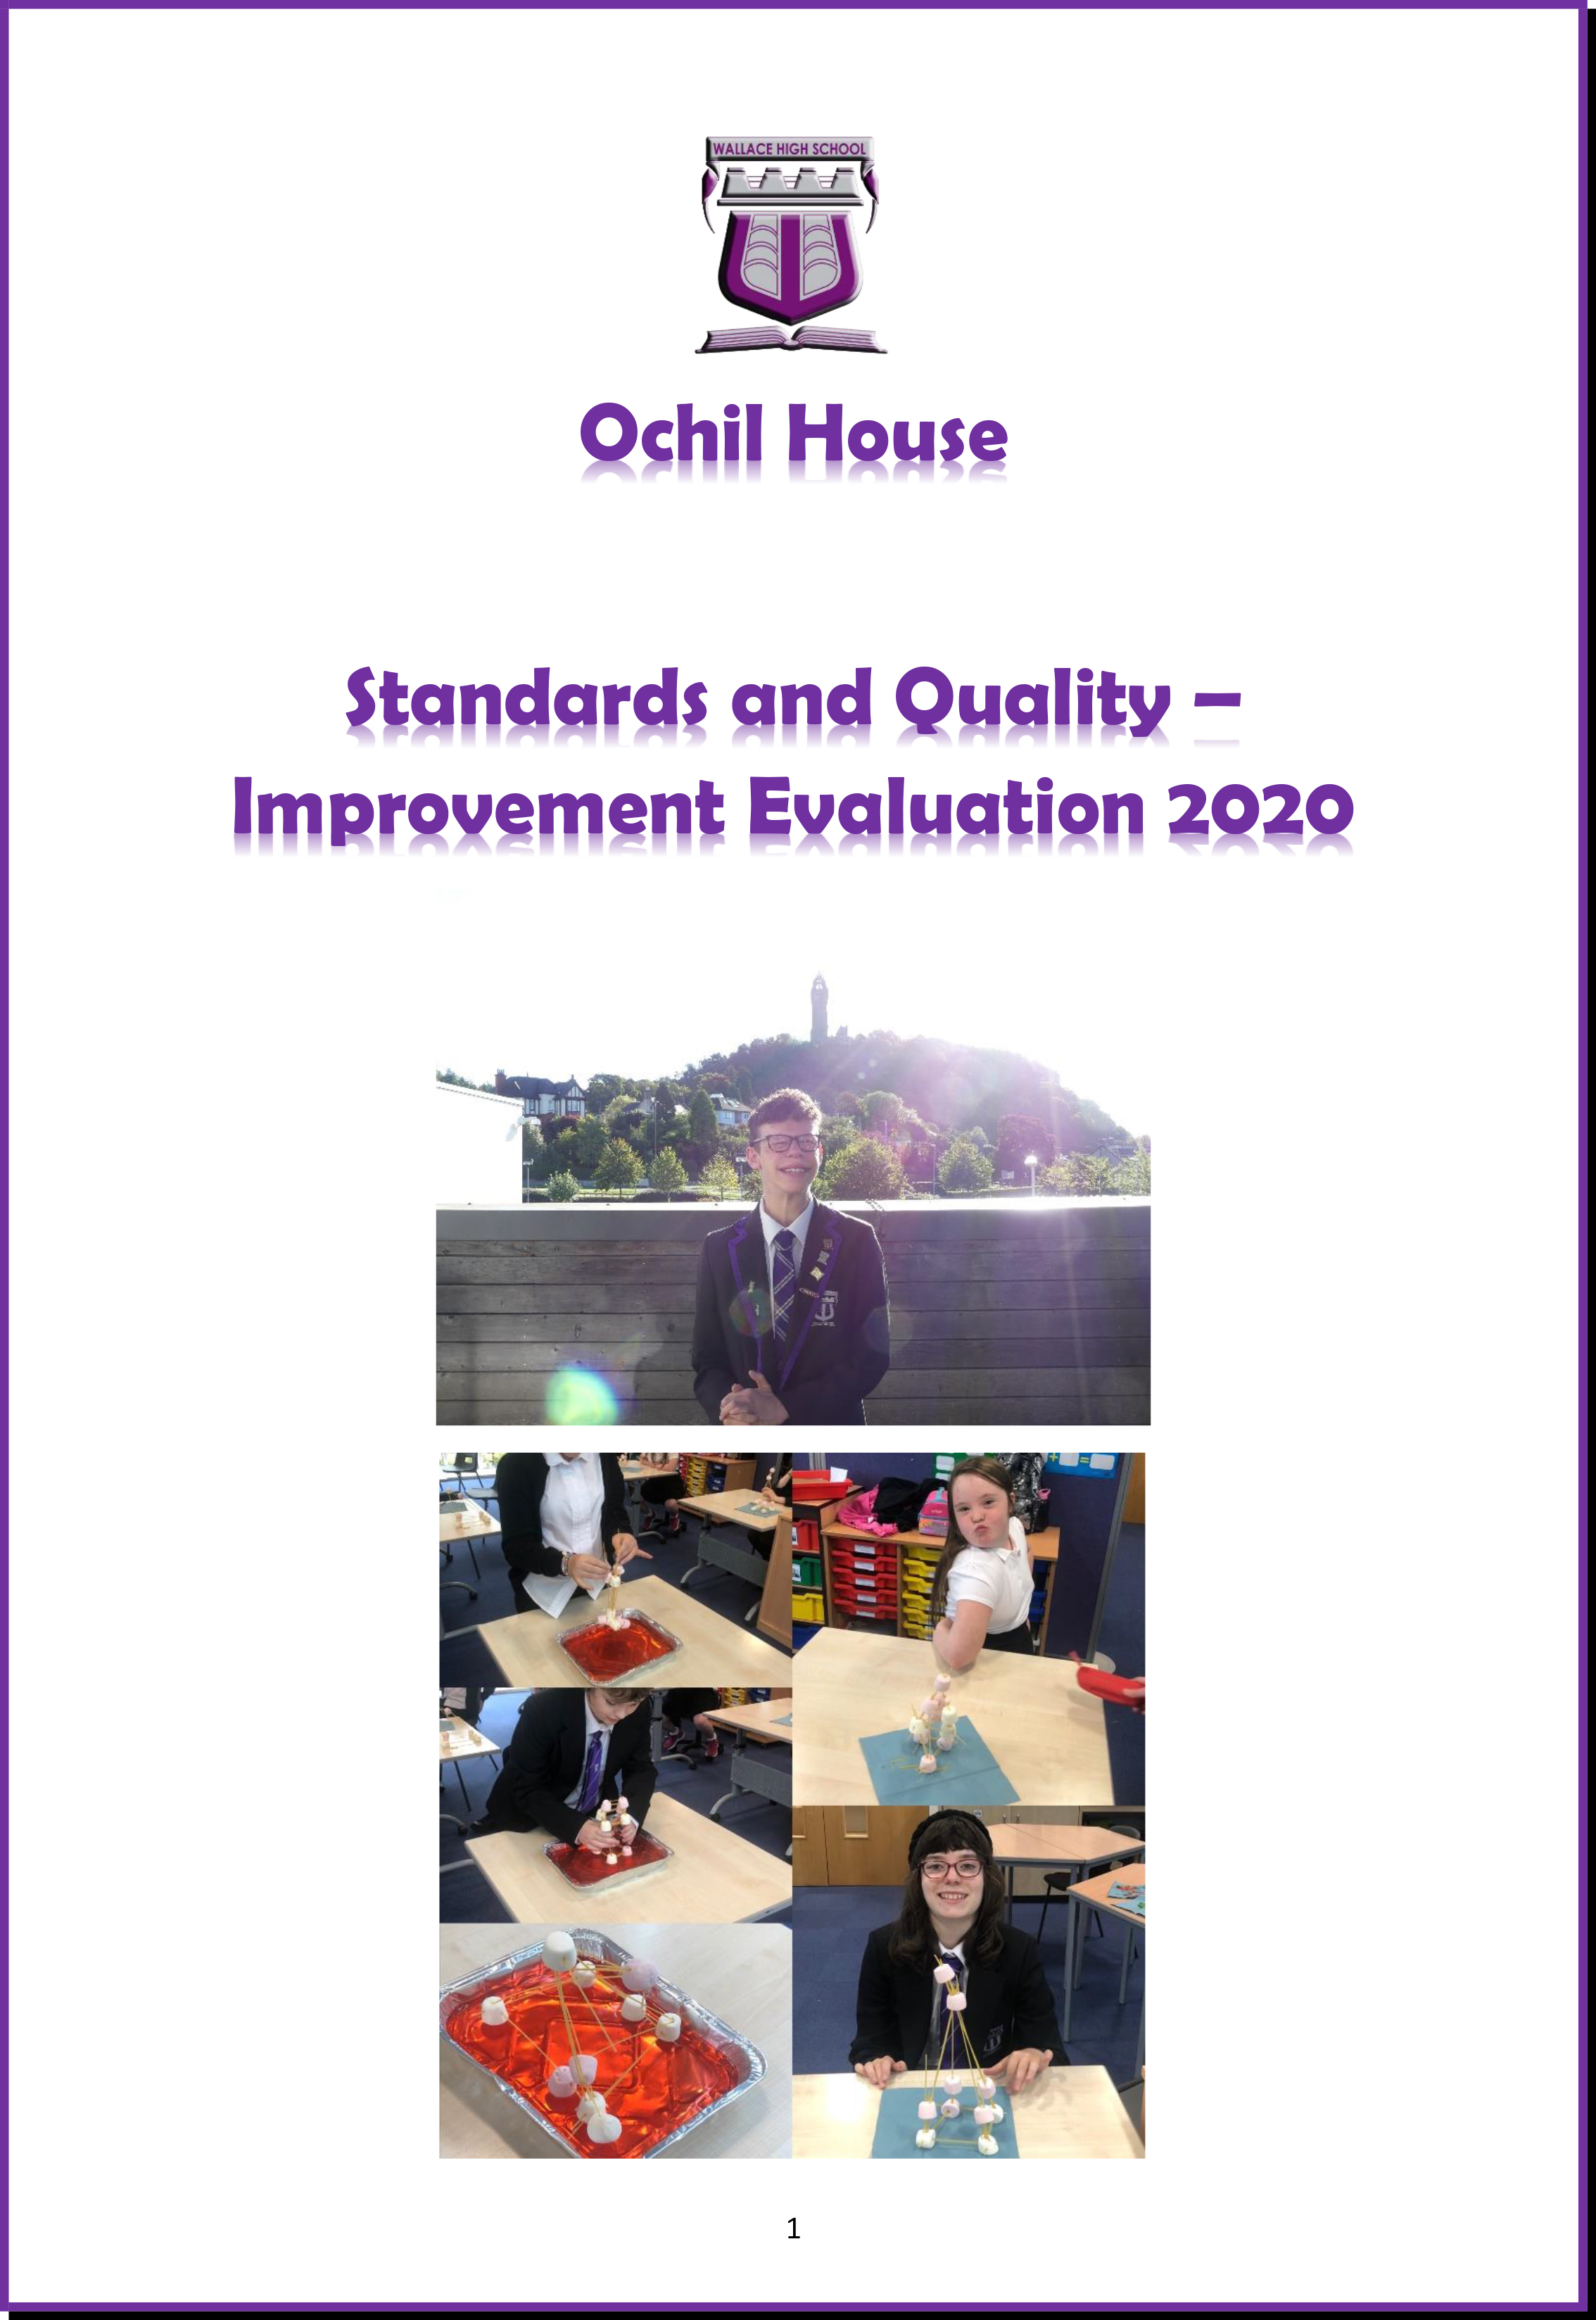 OCHIL HOUSE Improvement Evaluation 2020 1